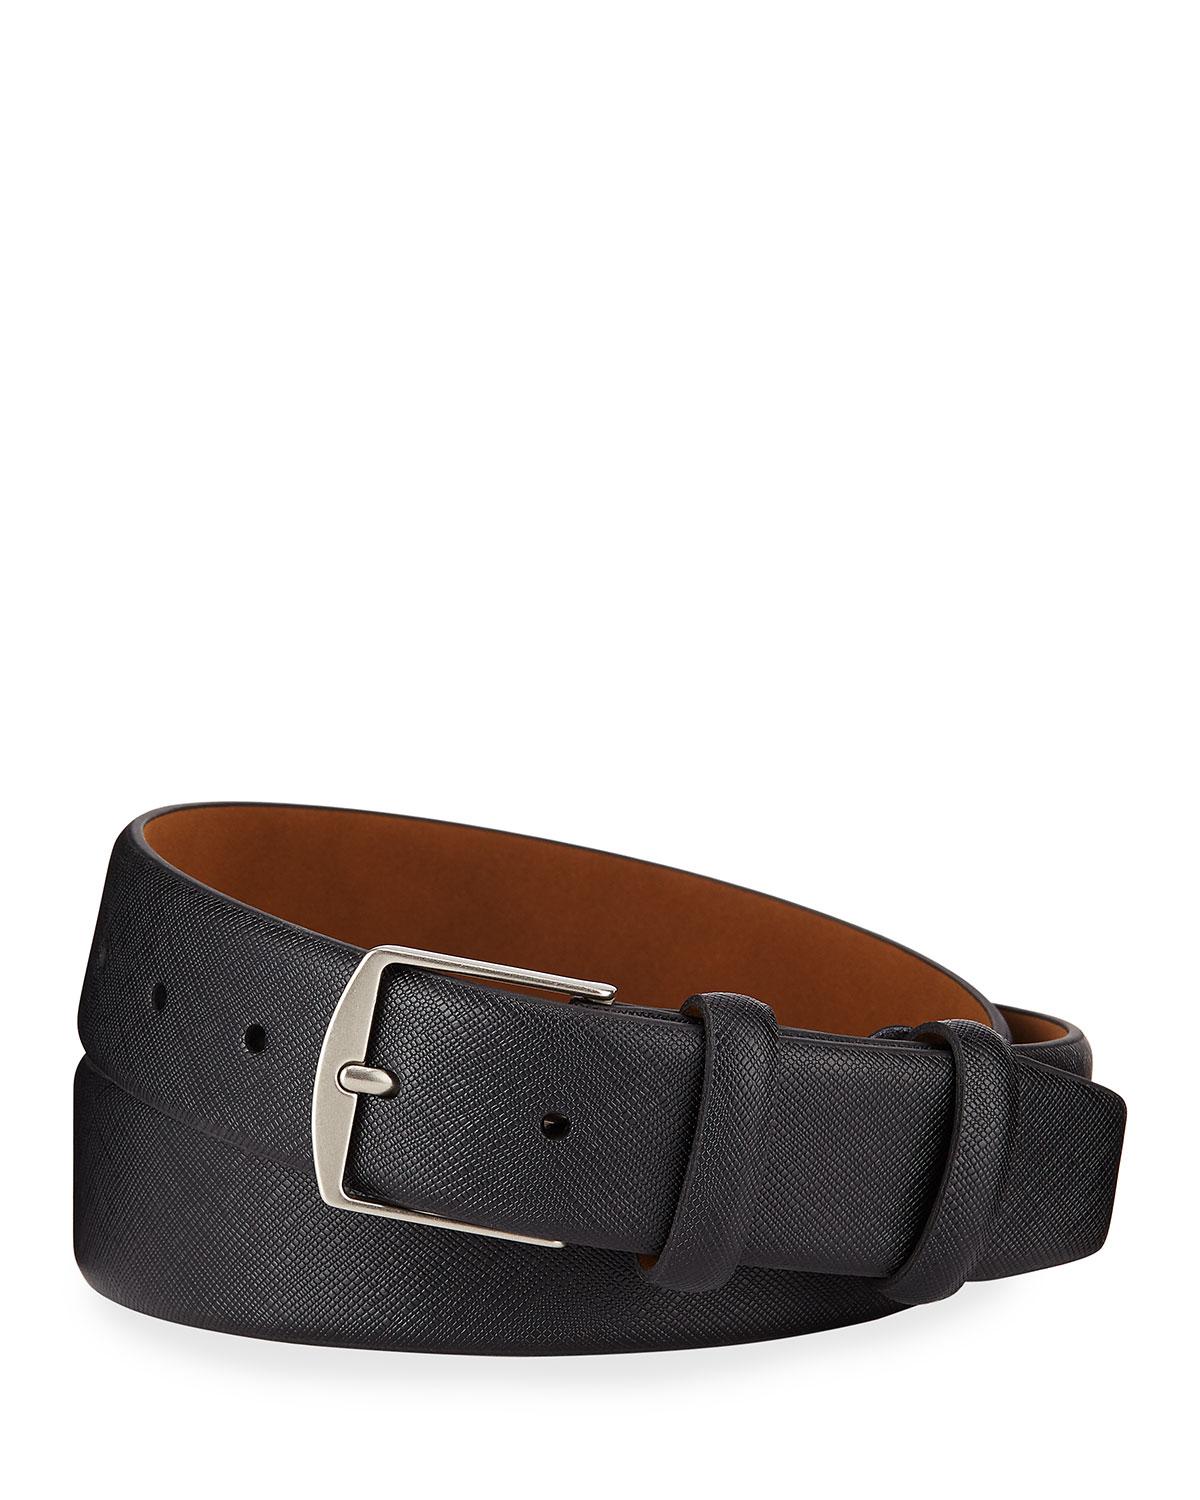 Neiman Marcus Saffiano Leather Double-loop Belt in Black for Men - Lyst